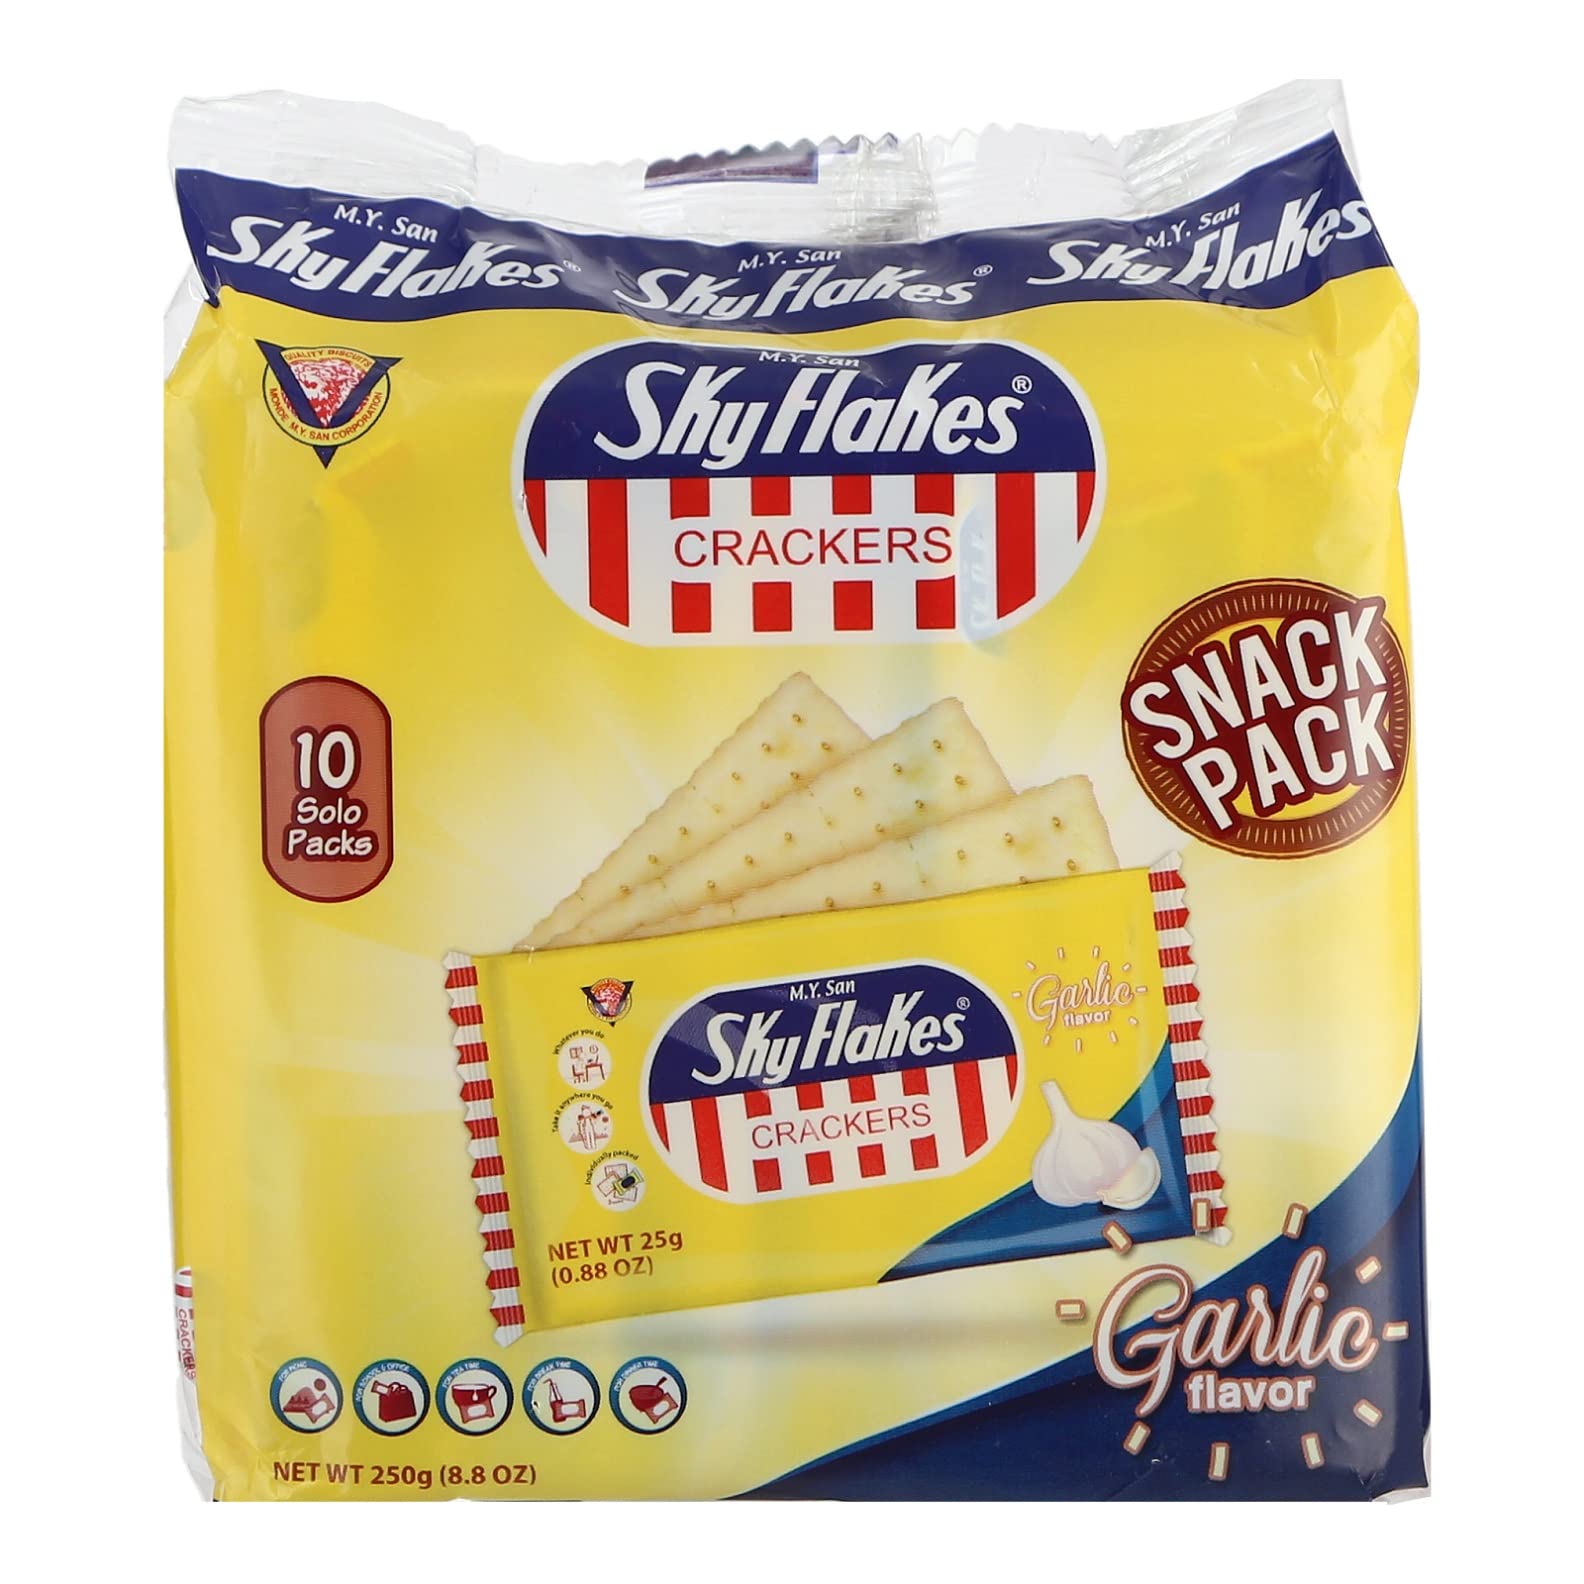 M.Y. San Sky Flakes Crackers, 7.05 Ounce